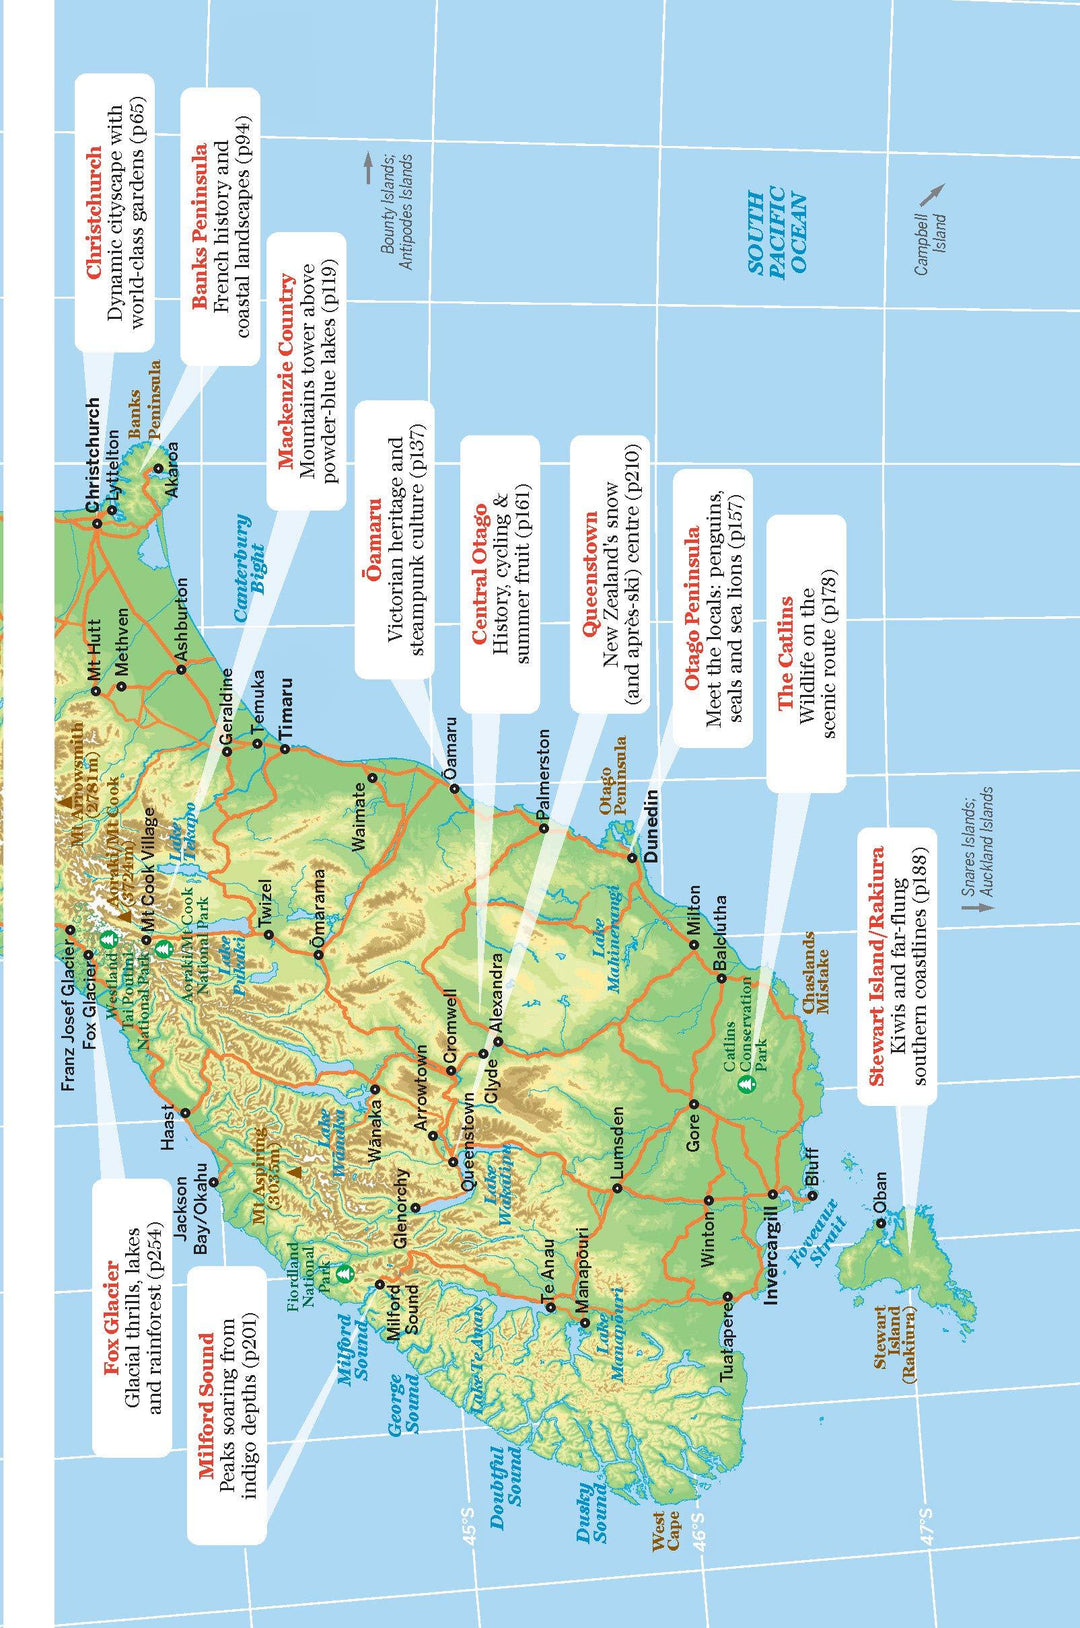 Guide de voyage (en anglais) - New Zealand's South Island - Édition 2021 | Lonely Planet guide de voyage Lonely Planet 